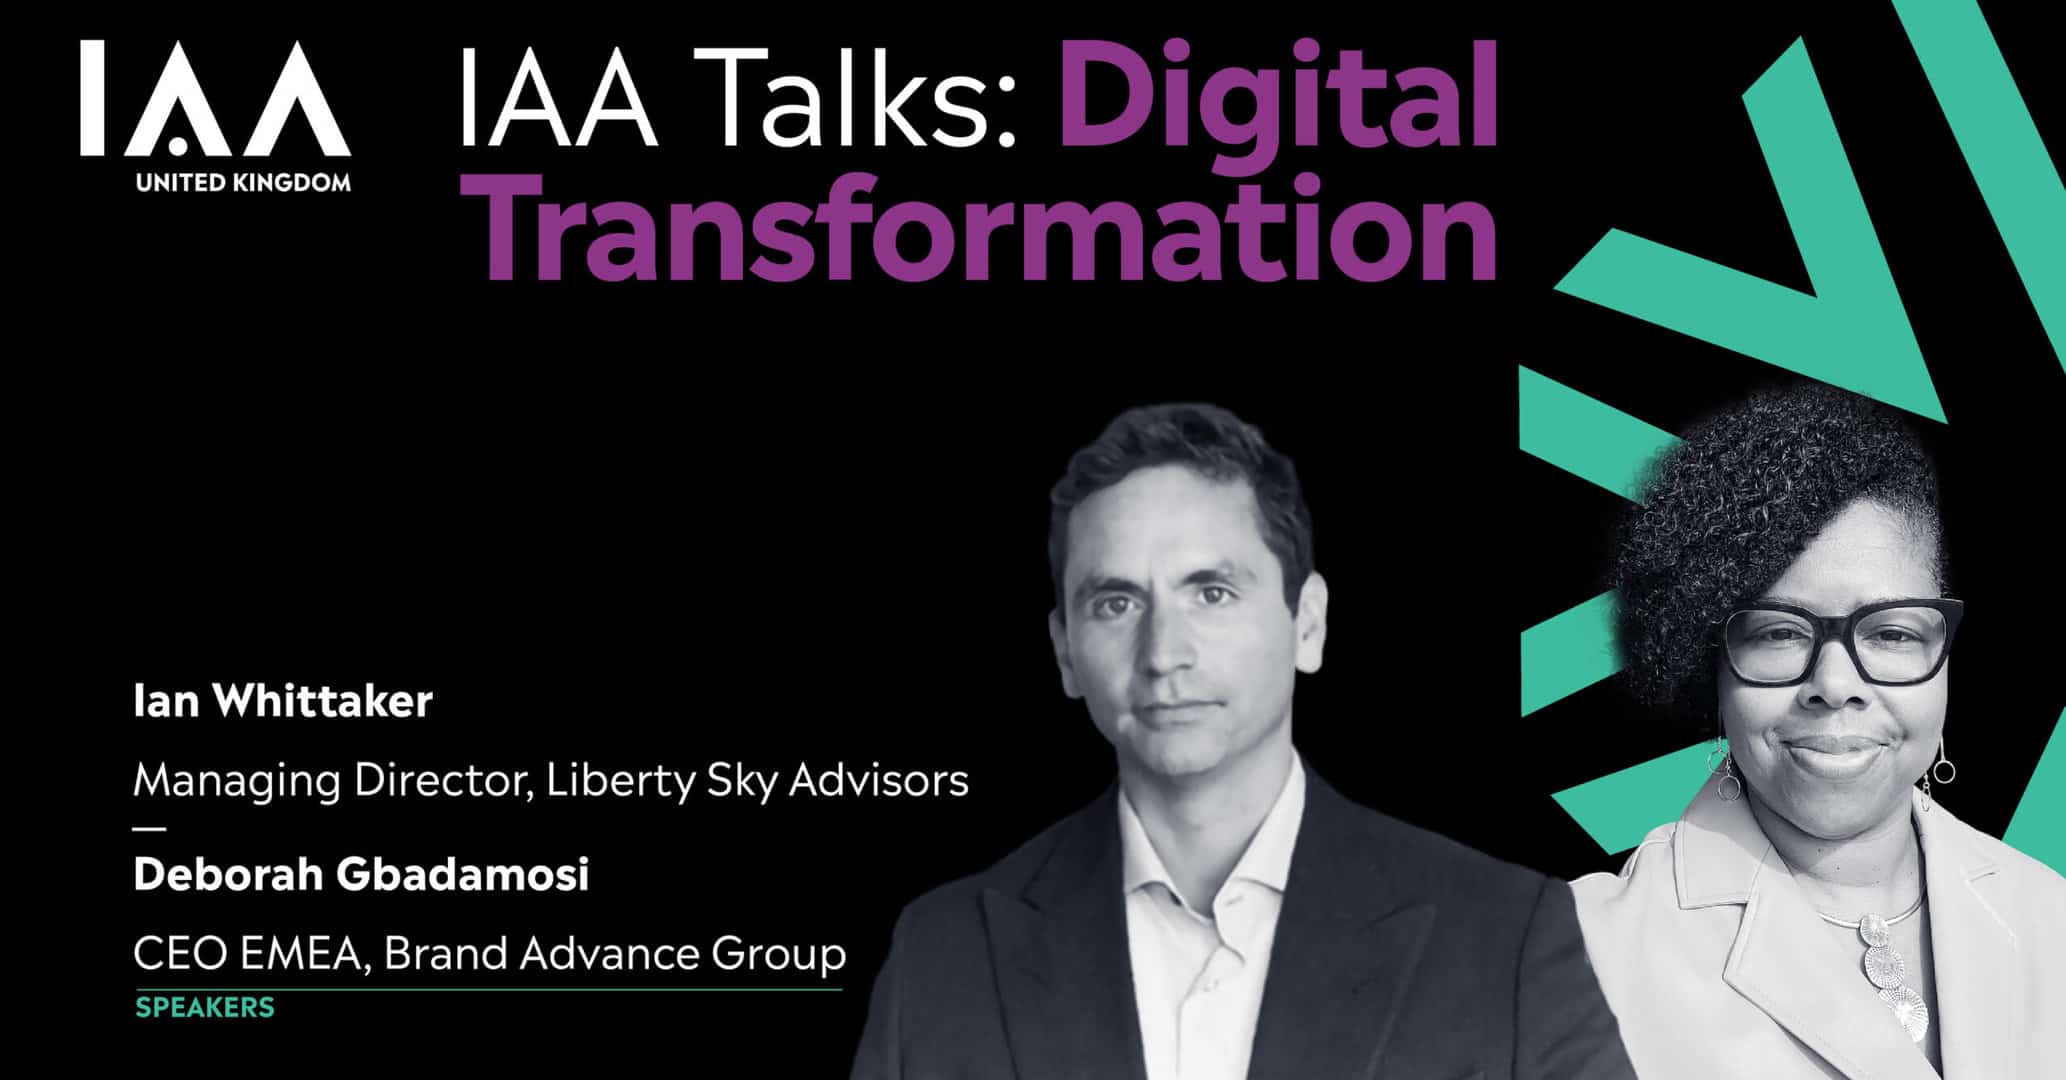 IAA TALKS: Digital Transformation